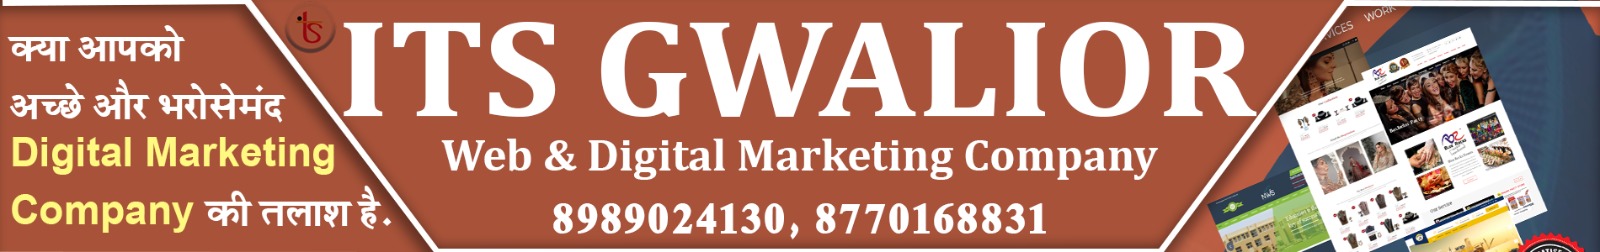 Digital Marketing and Web Designing Company